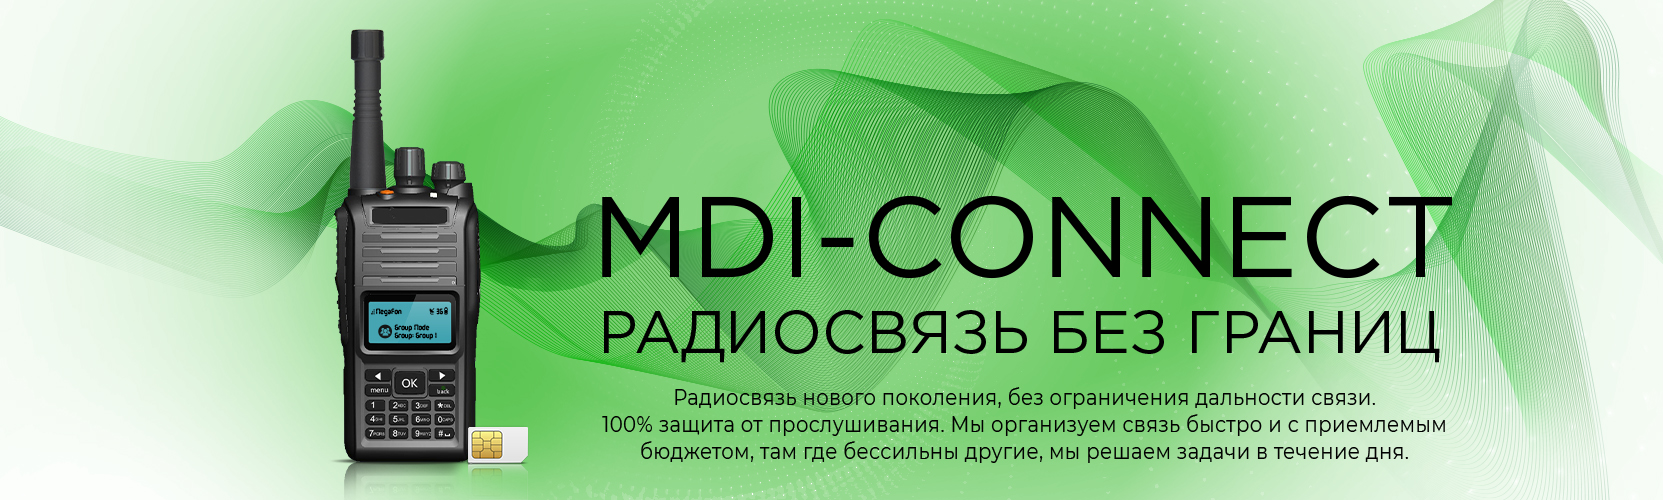 MDI-CONNECT - радиосвязь без границ